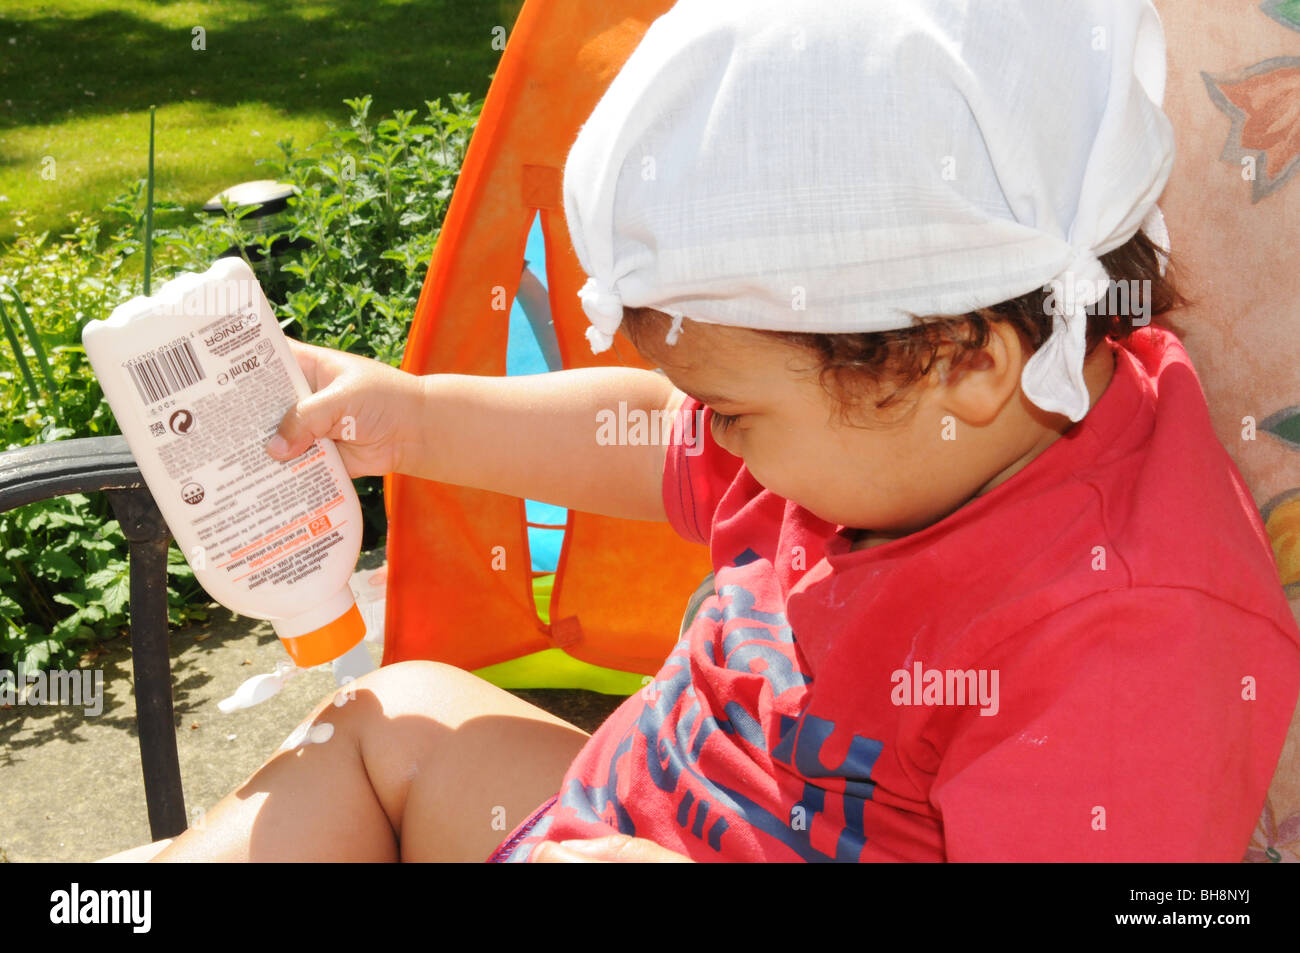 2 year old boy wearing sunscreen and sun hat Stock Photo